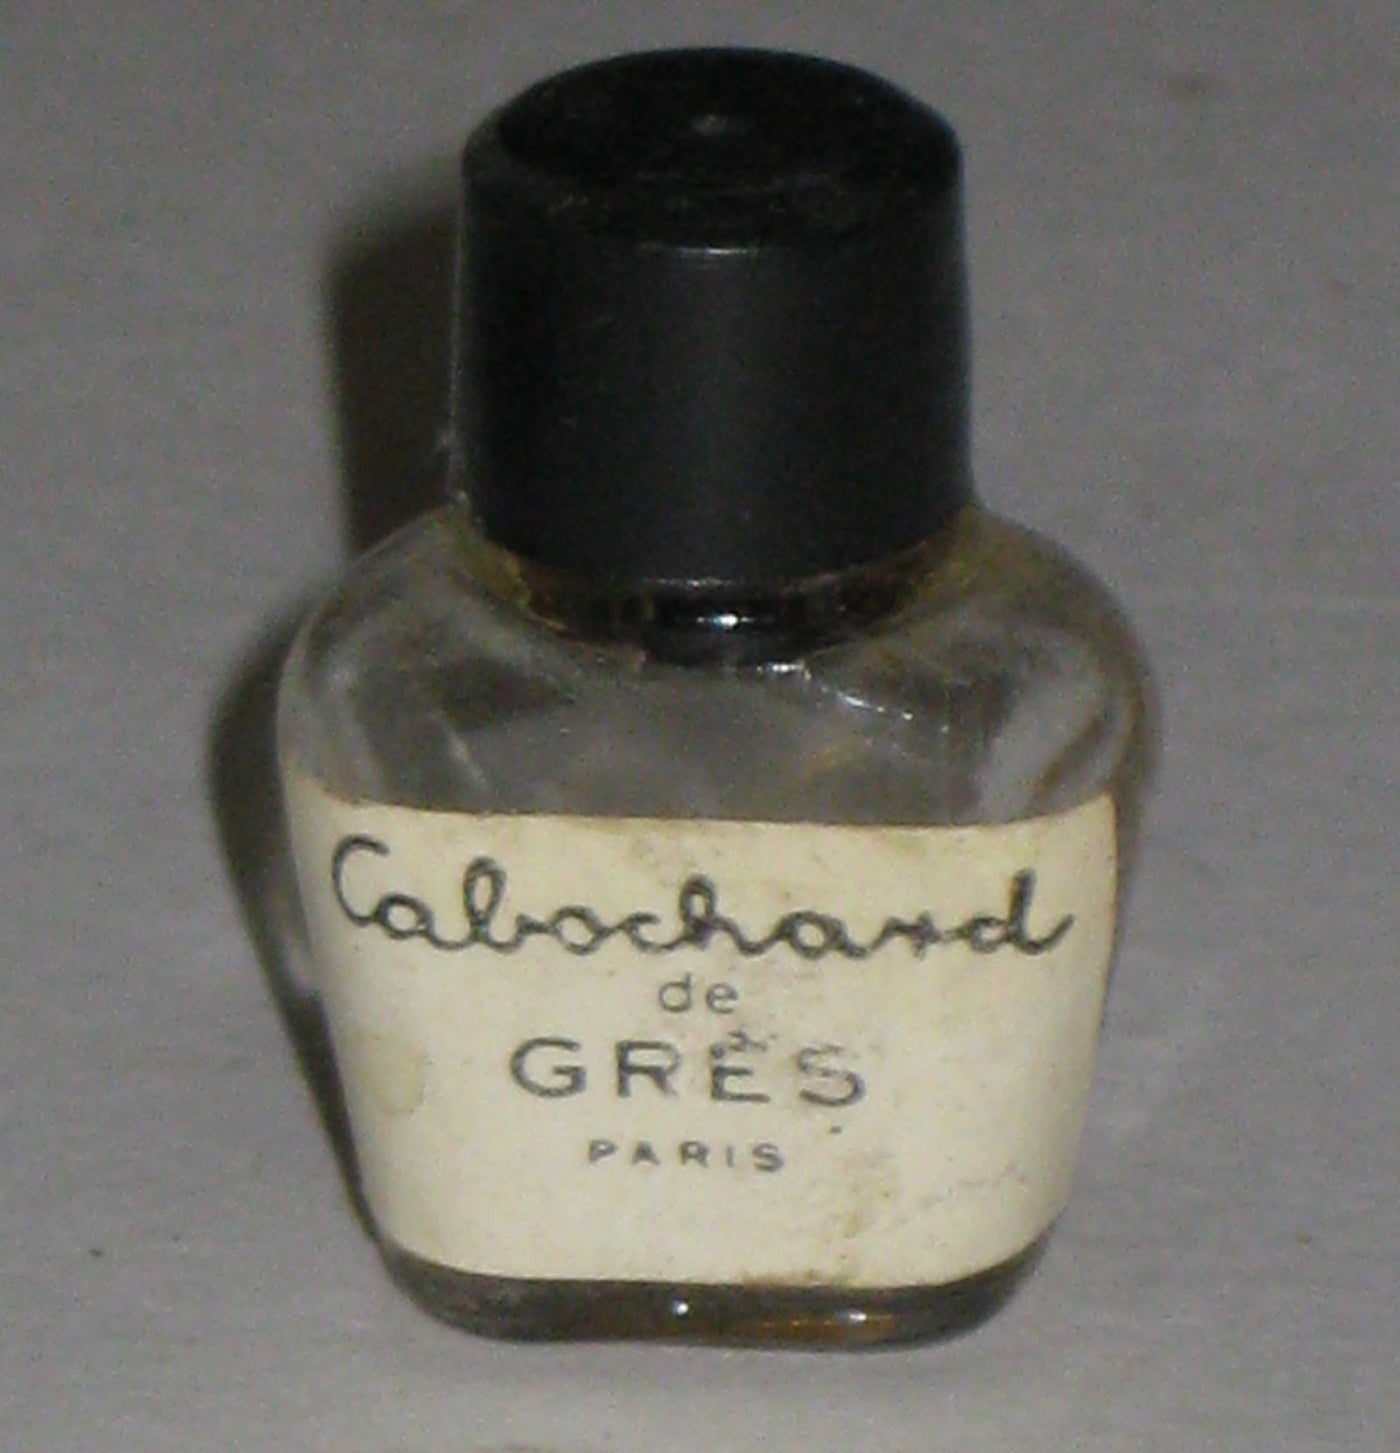 Gres Cabochard Perfume Mini